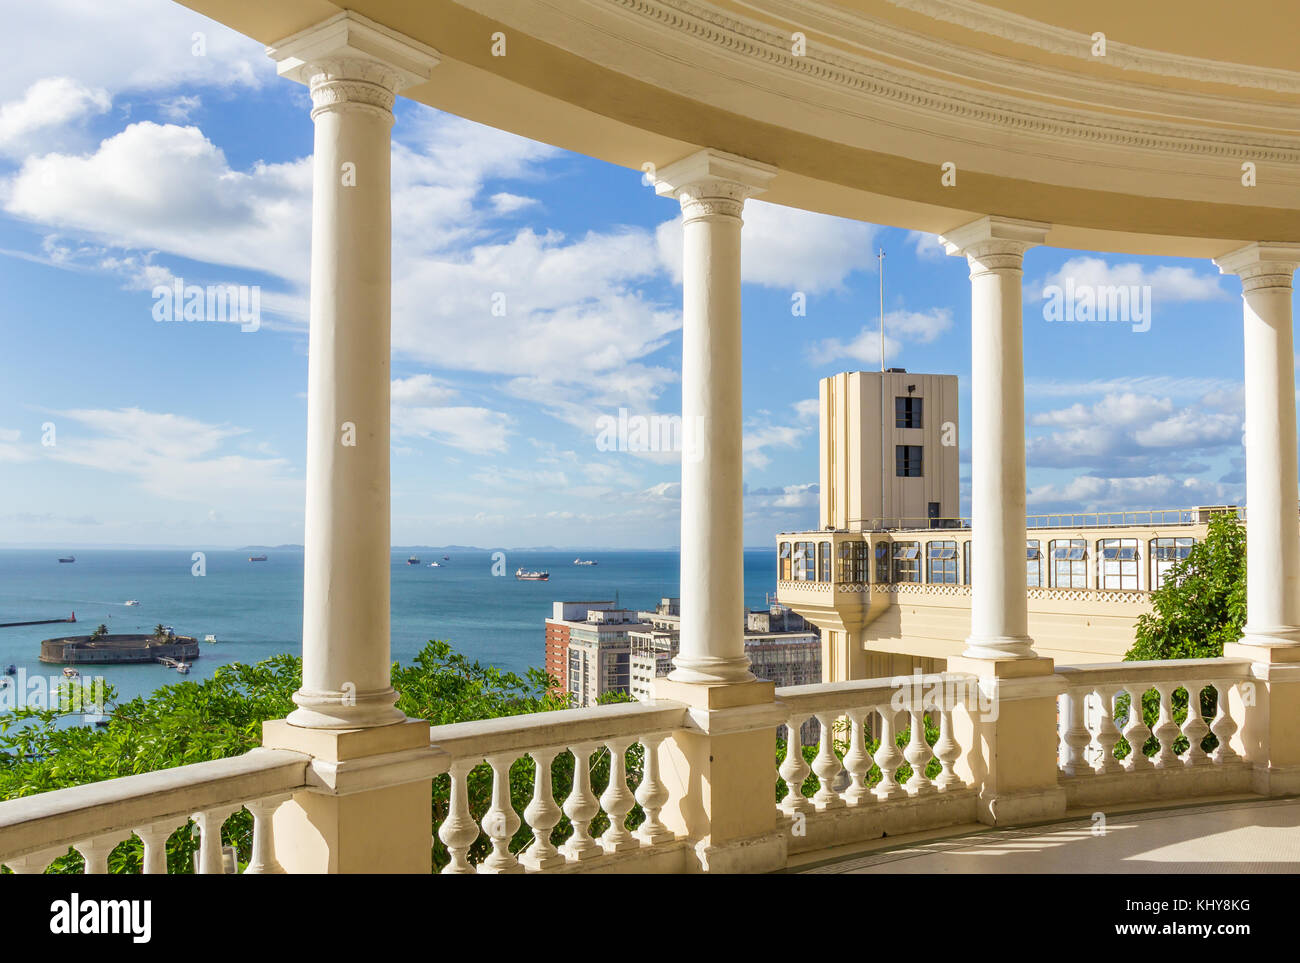 https://c8.alamy.com/comp/KHY8KG/view-from-the-balcony-of-rio-branco-palace-salvador-de-bahia-brazil-KHY8KG.jpg